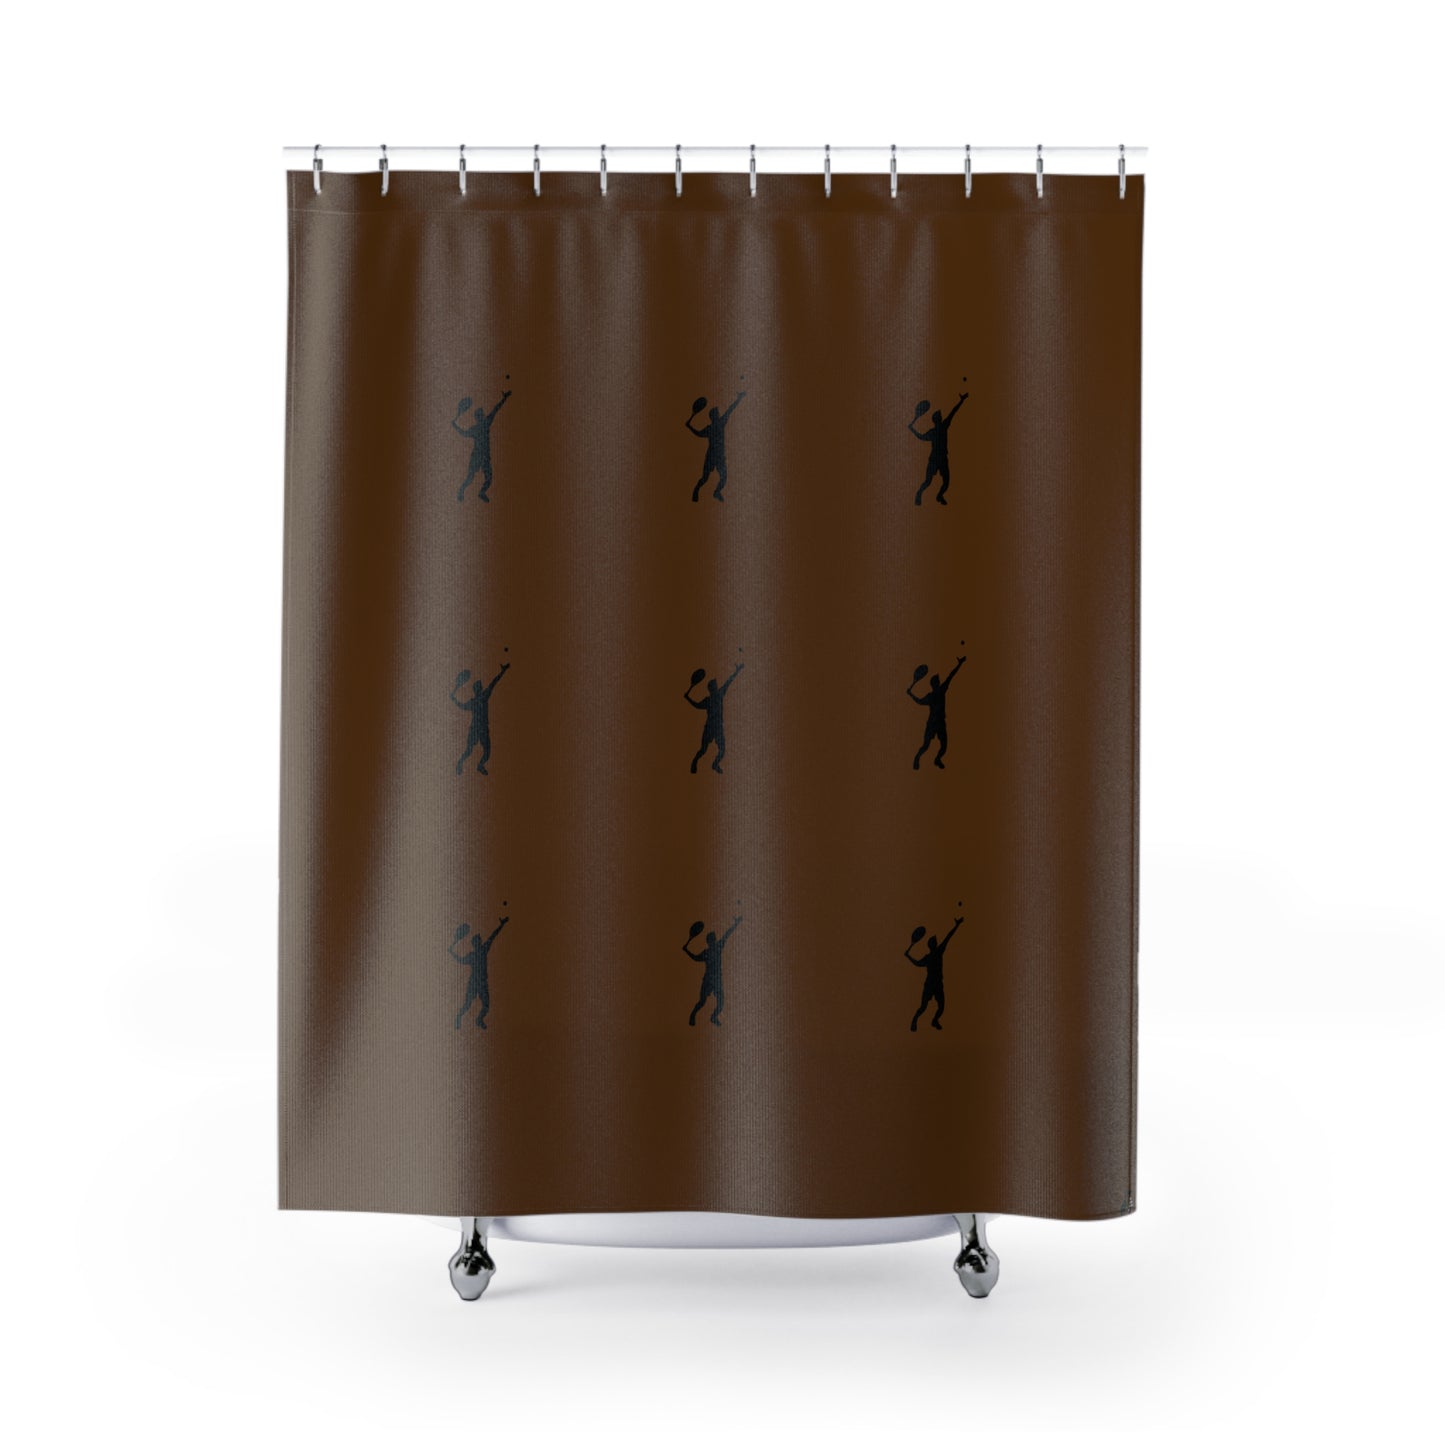 Shower Curtains: #2 Tennis Brown